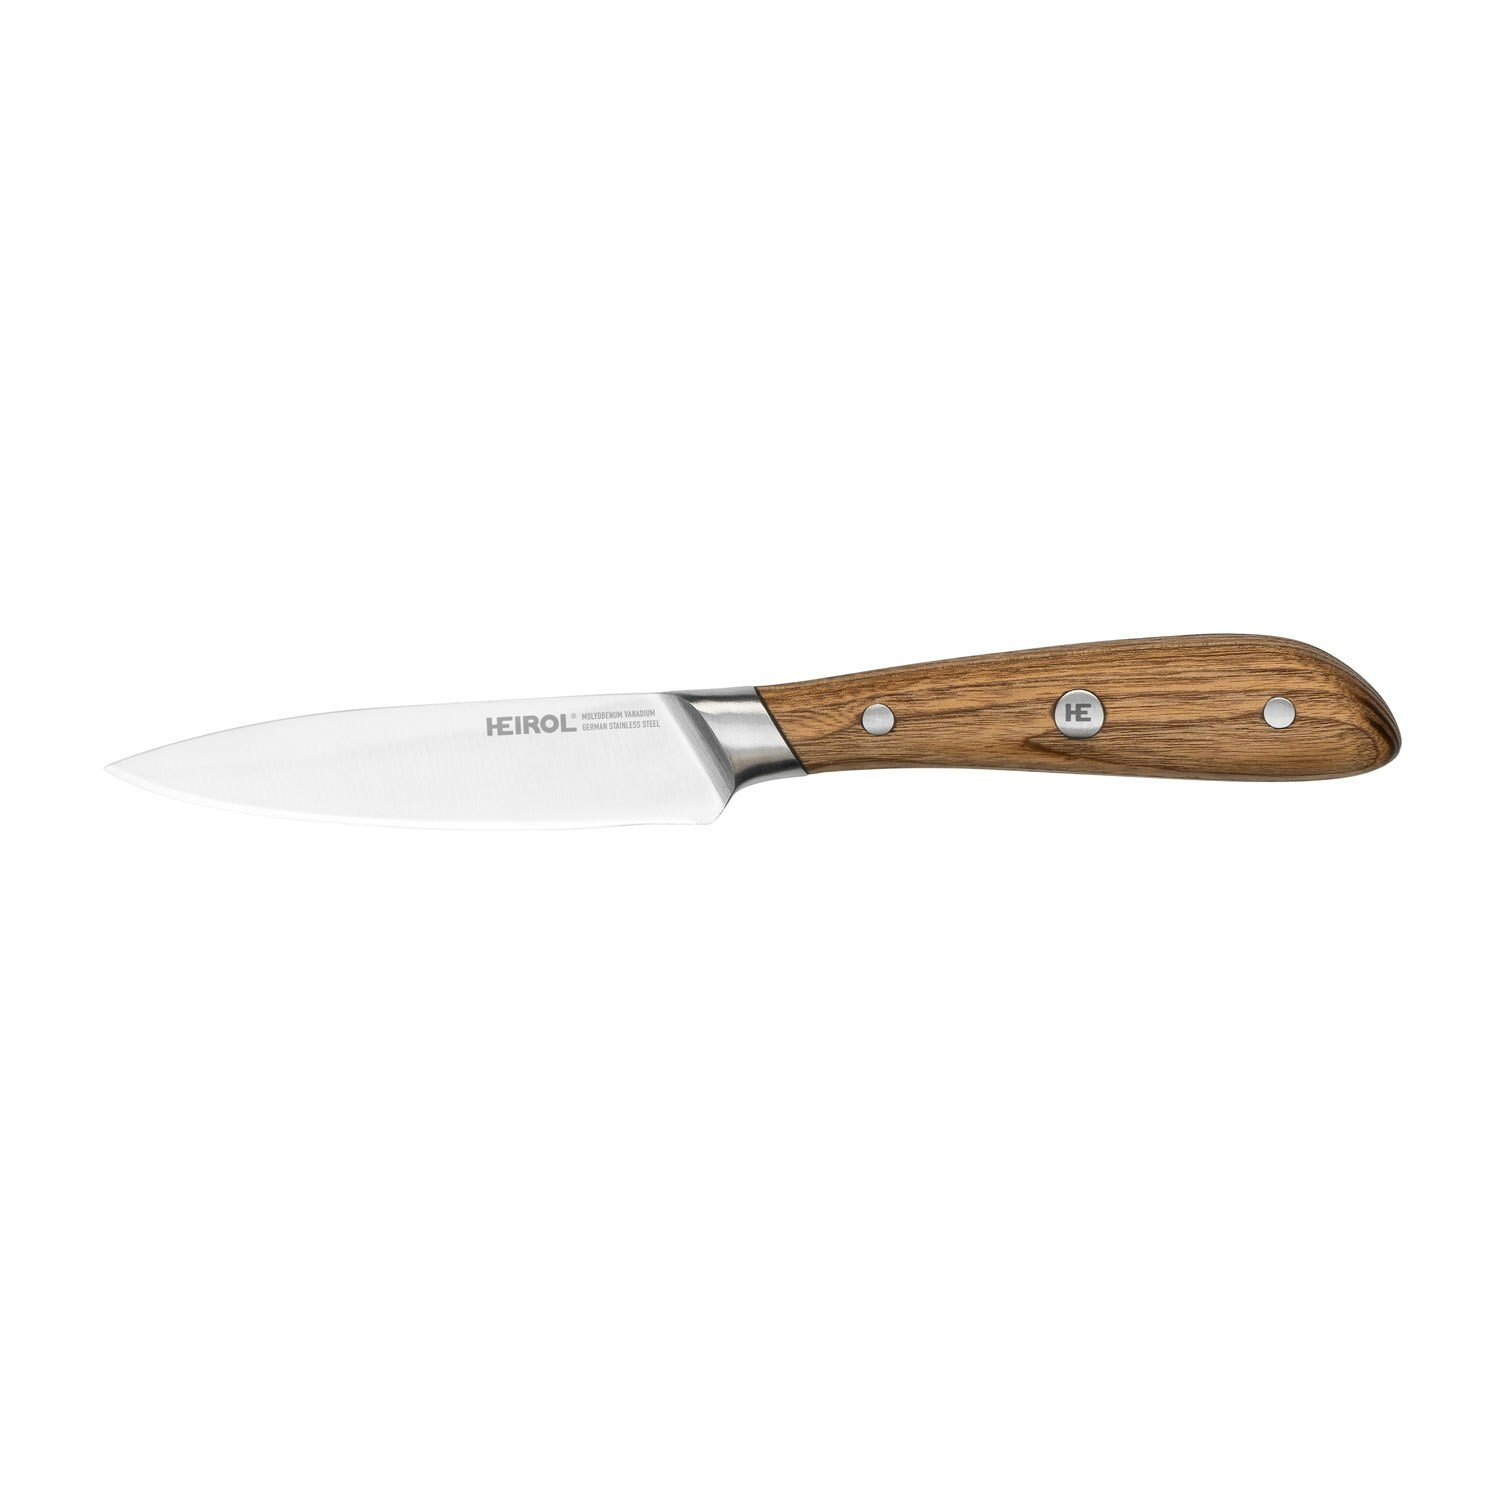 https://royaldesign.com/image/2/heirol-albera-paring-knife-10-cm-0